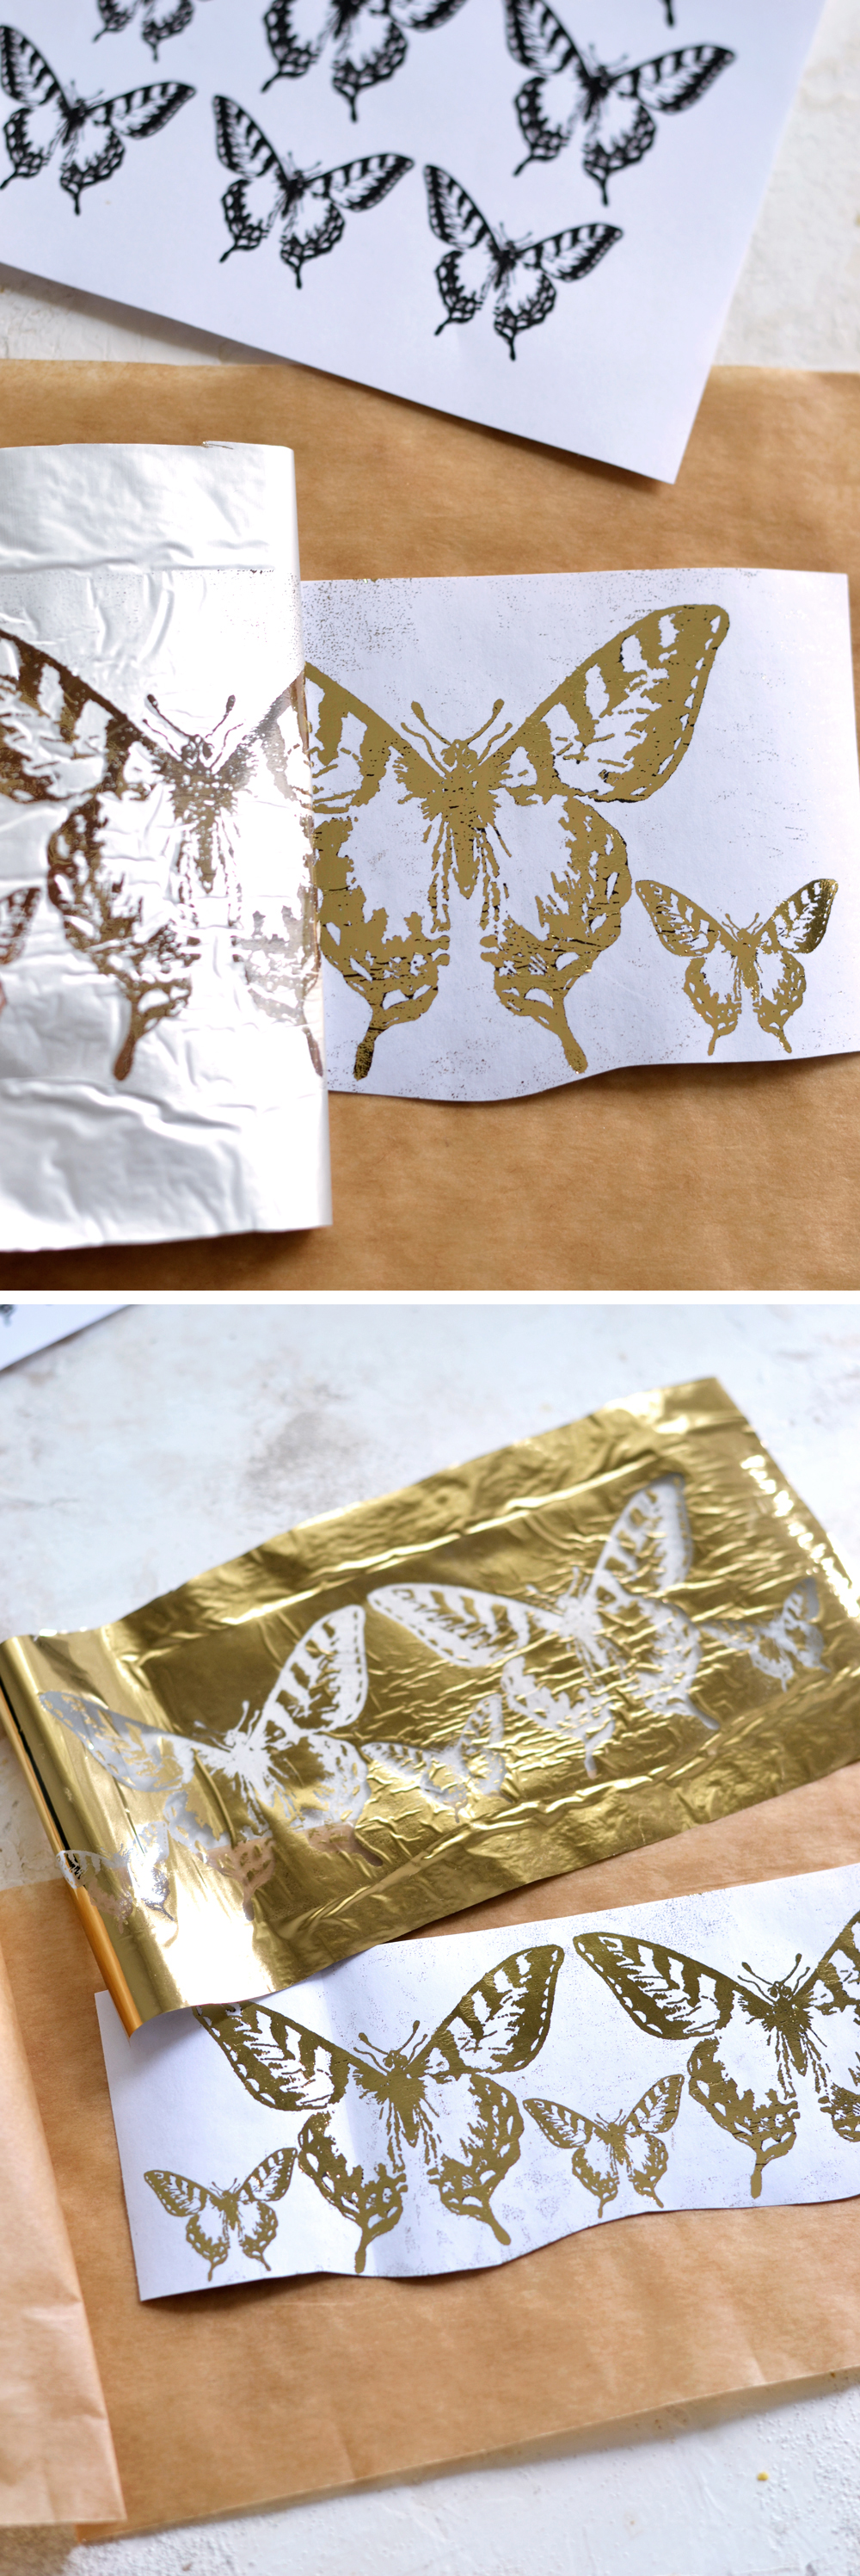 Adding gold foil to butterflies